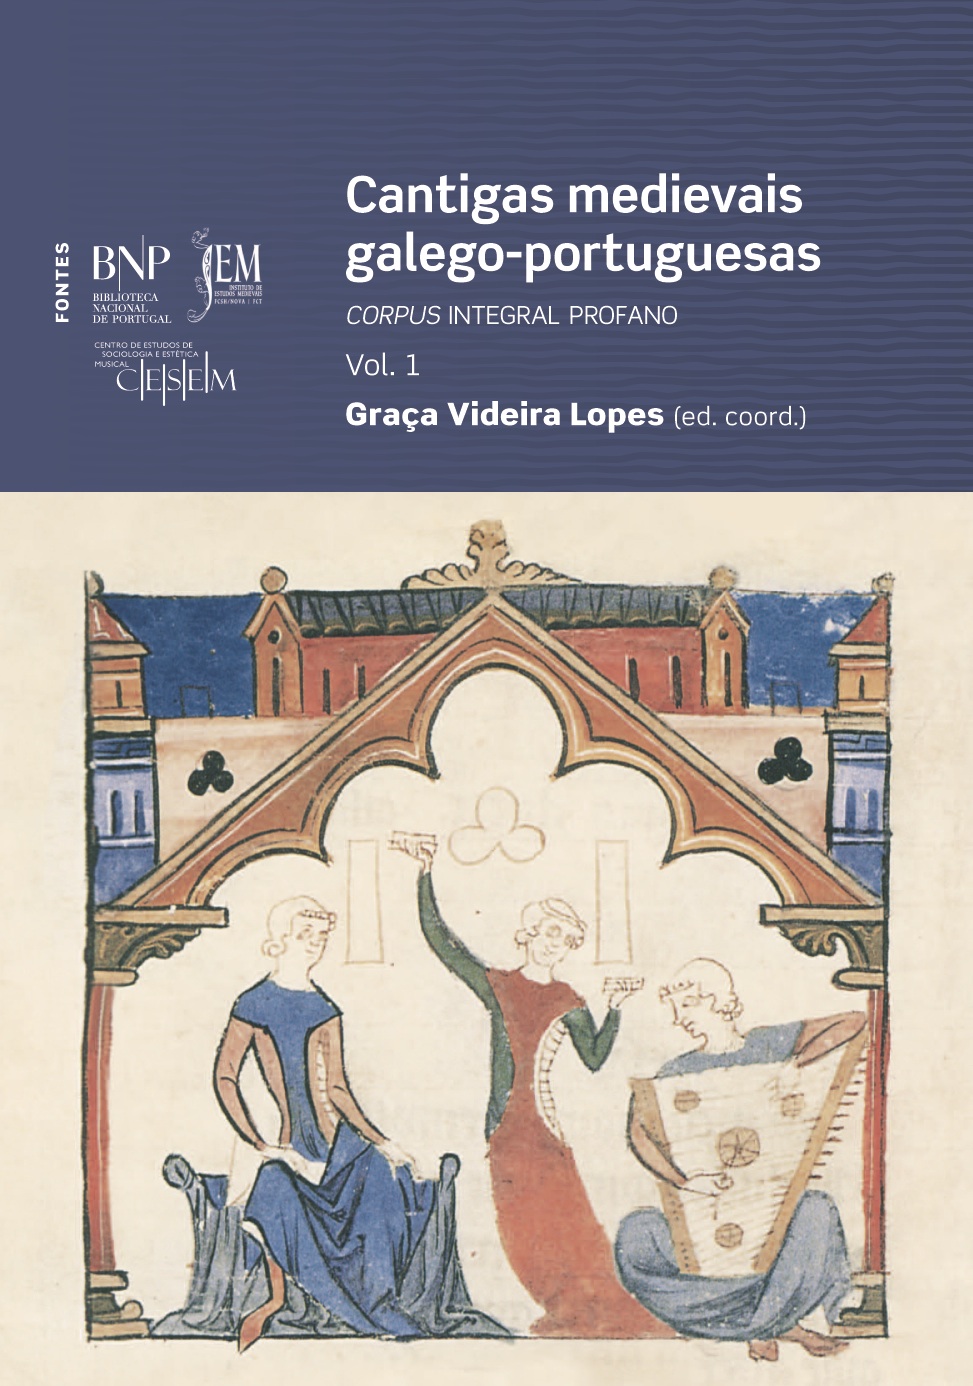 Cantigas medievais galego-portuguesas: corpus integral profano 1.º vol. (print on demand)